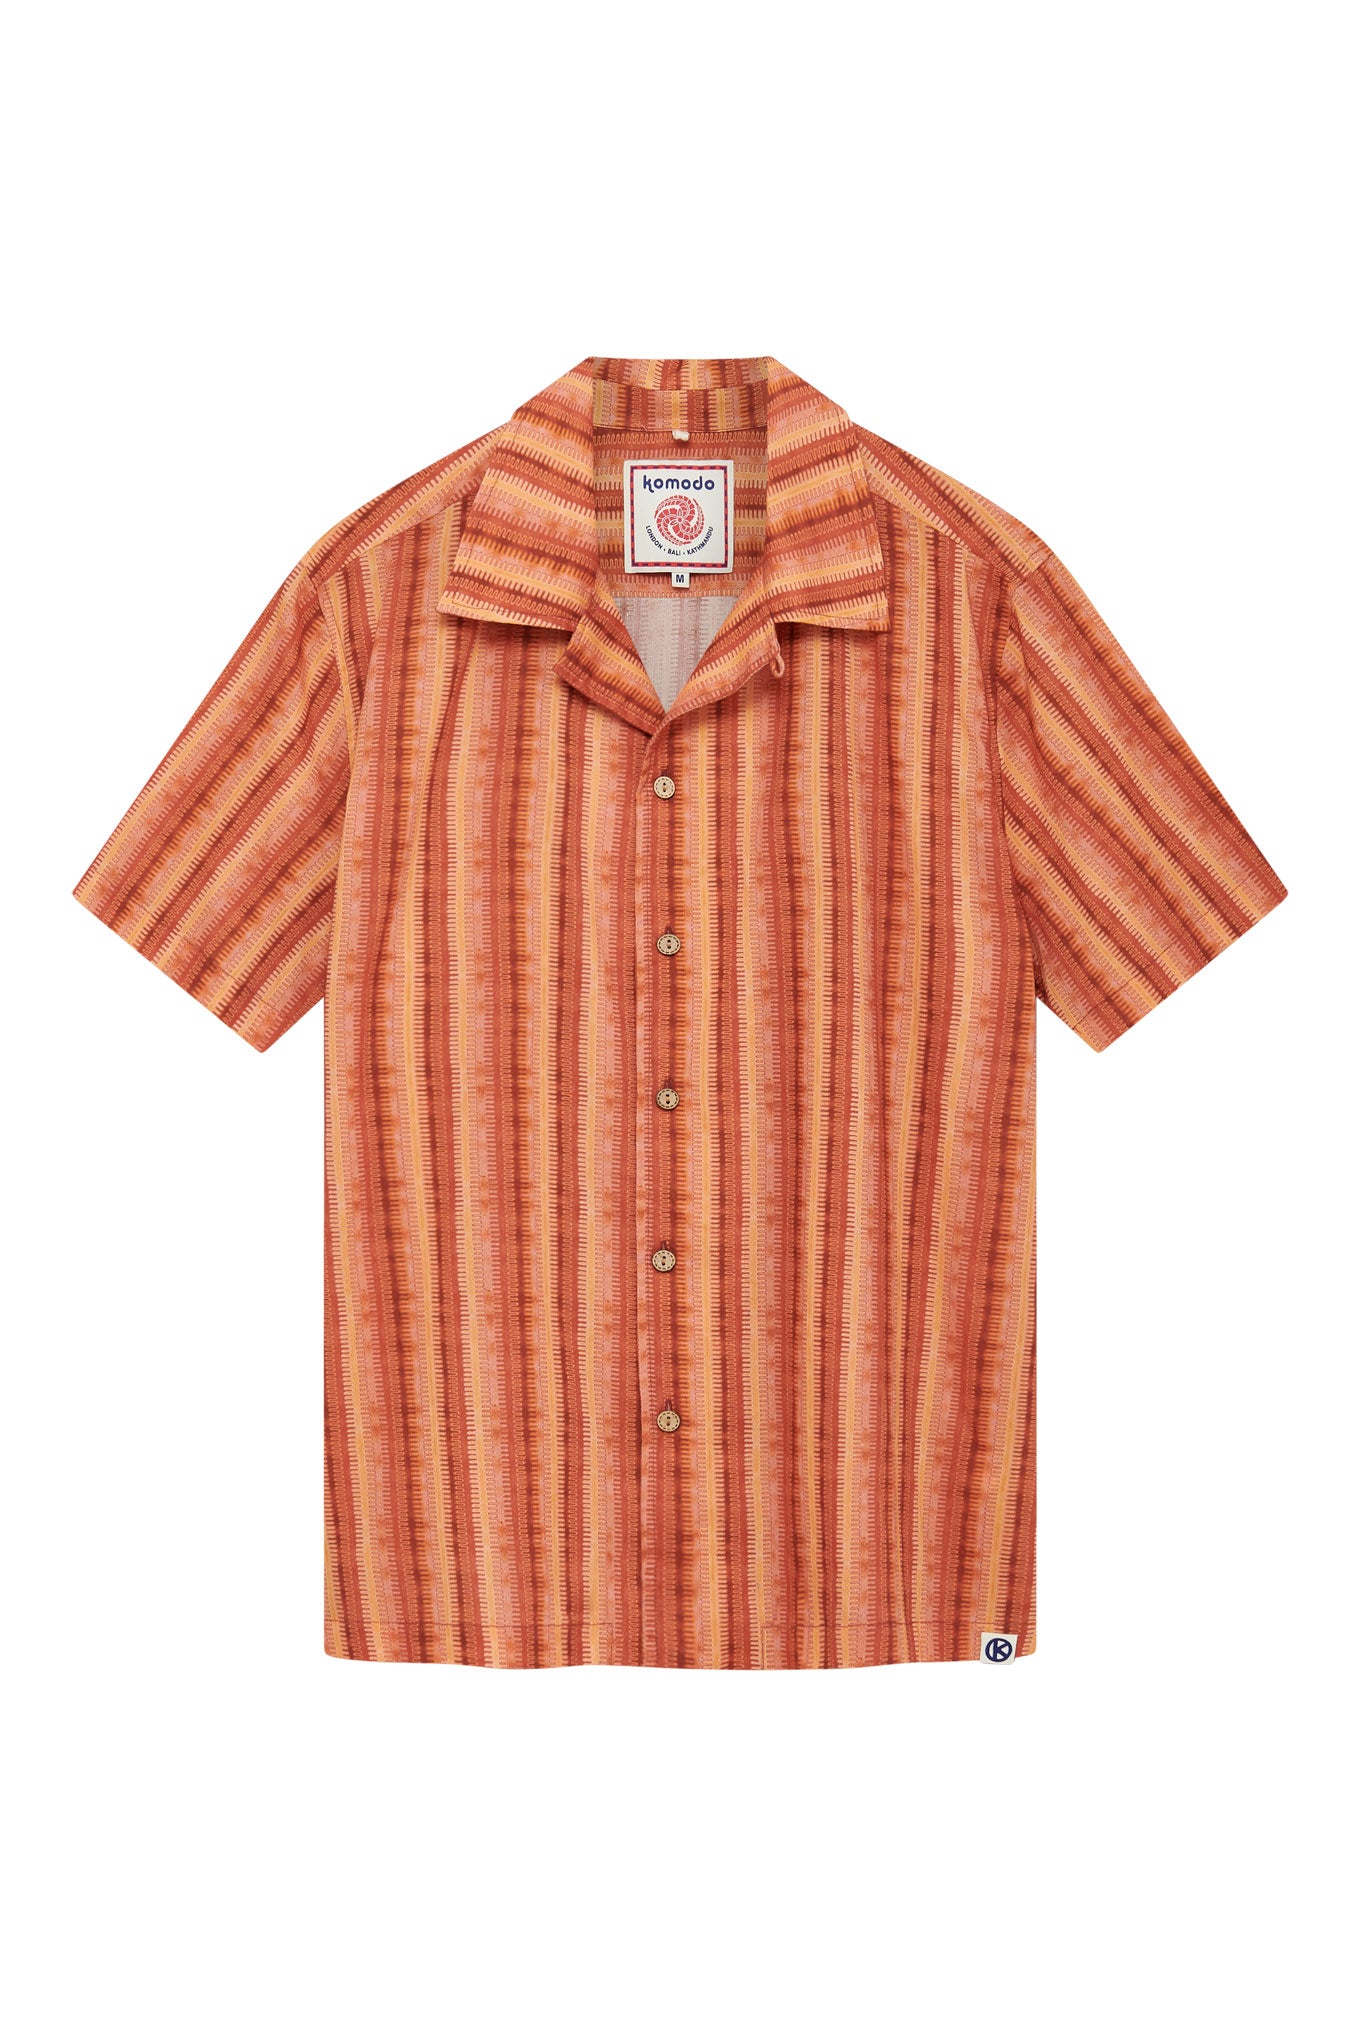 SPINDRIFT - Organic Cotton Shirt Weave Stripe Peach